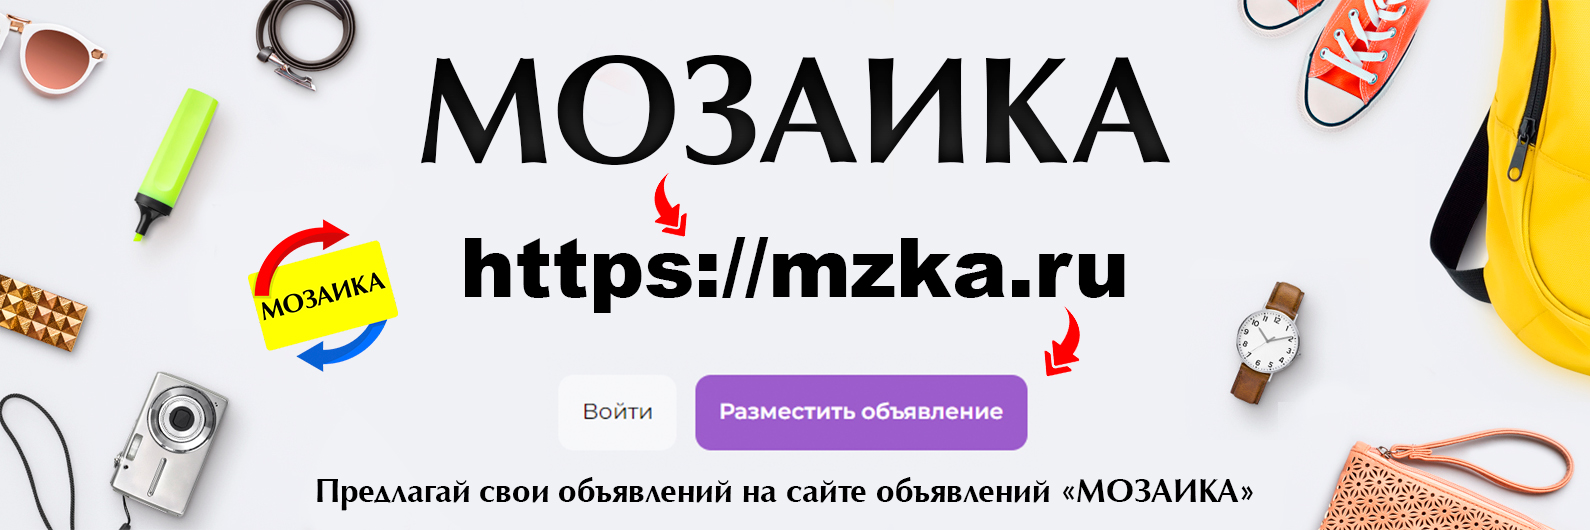 Сайт МОЗАИКА ДНР